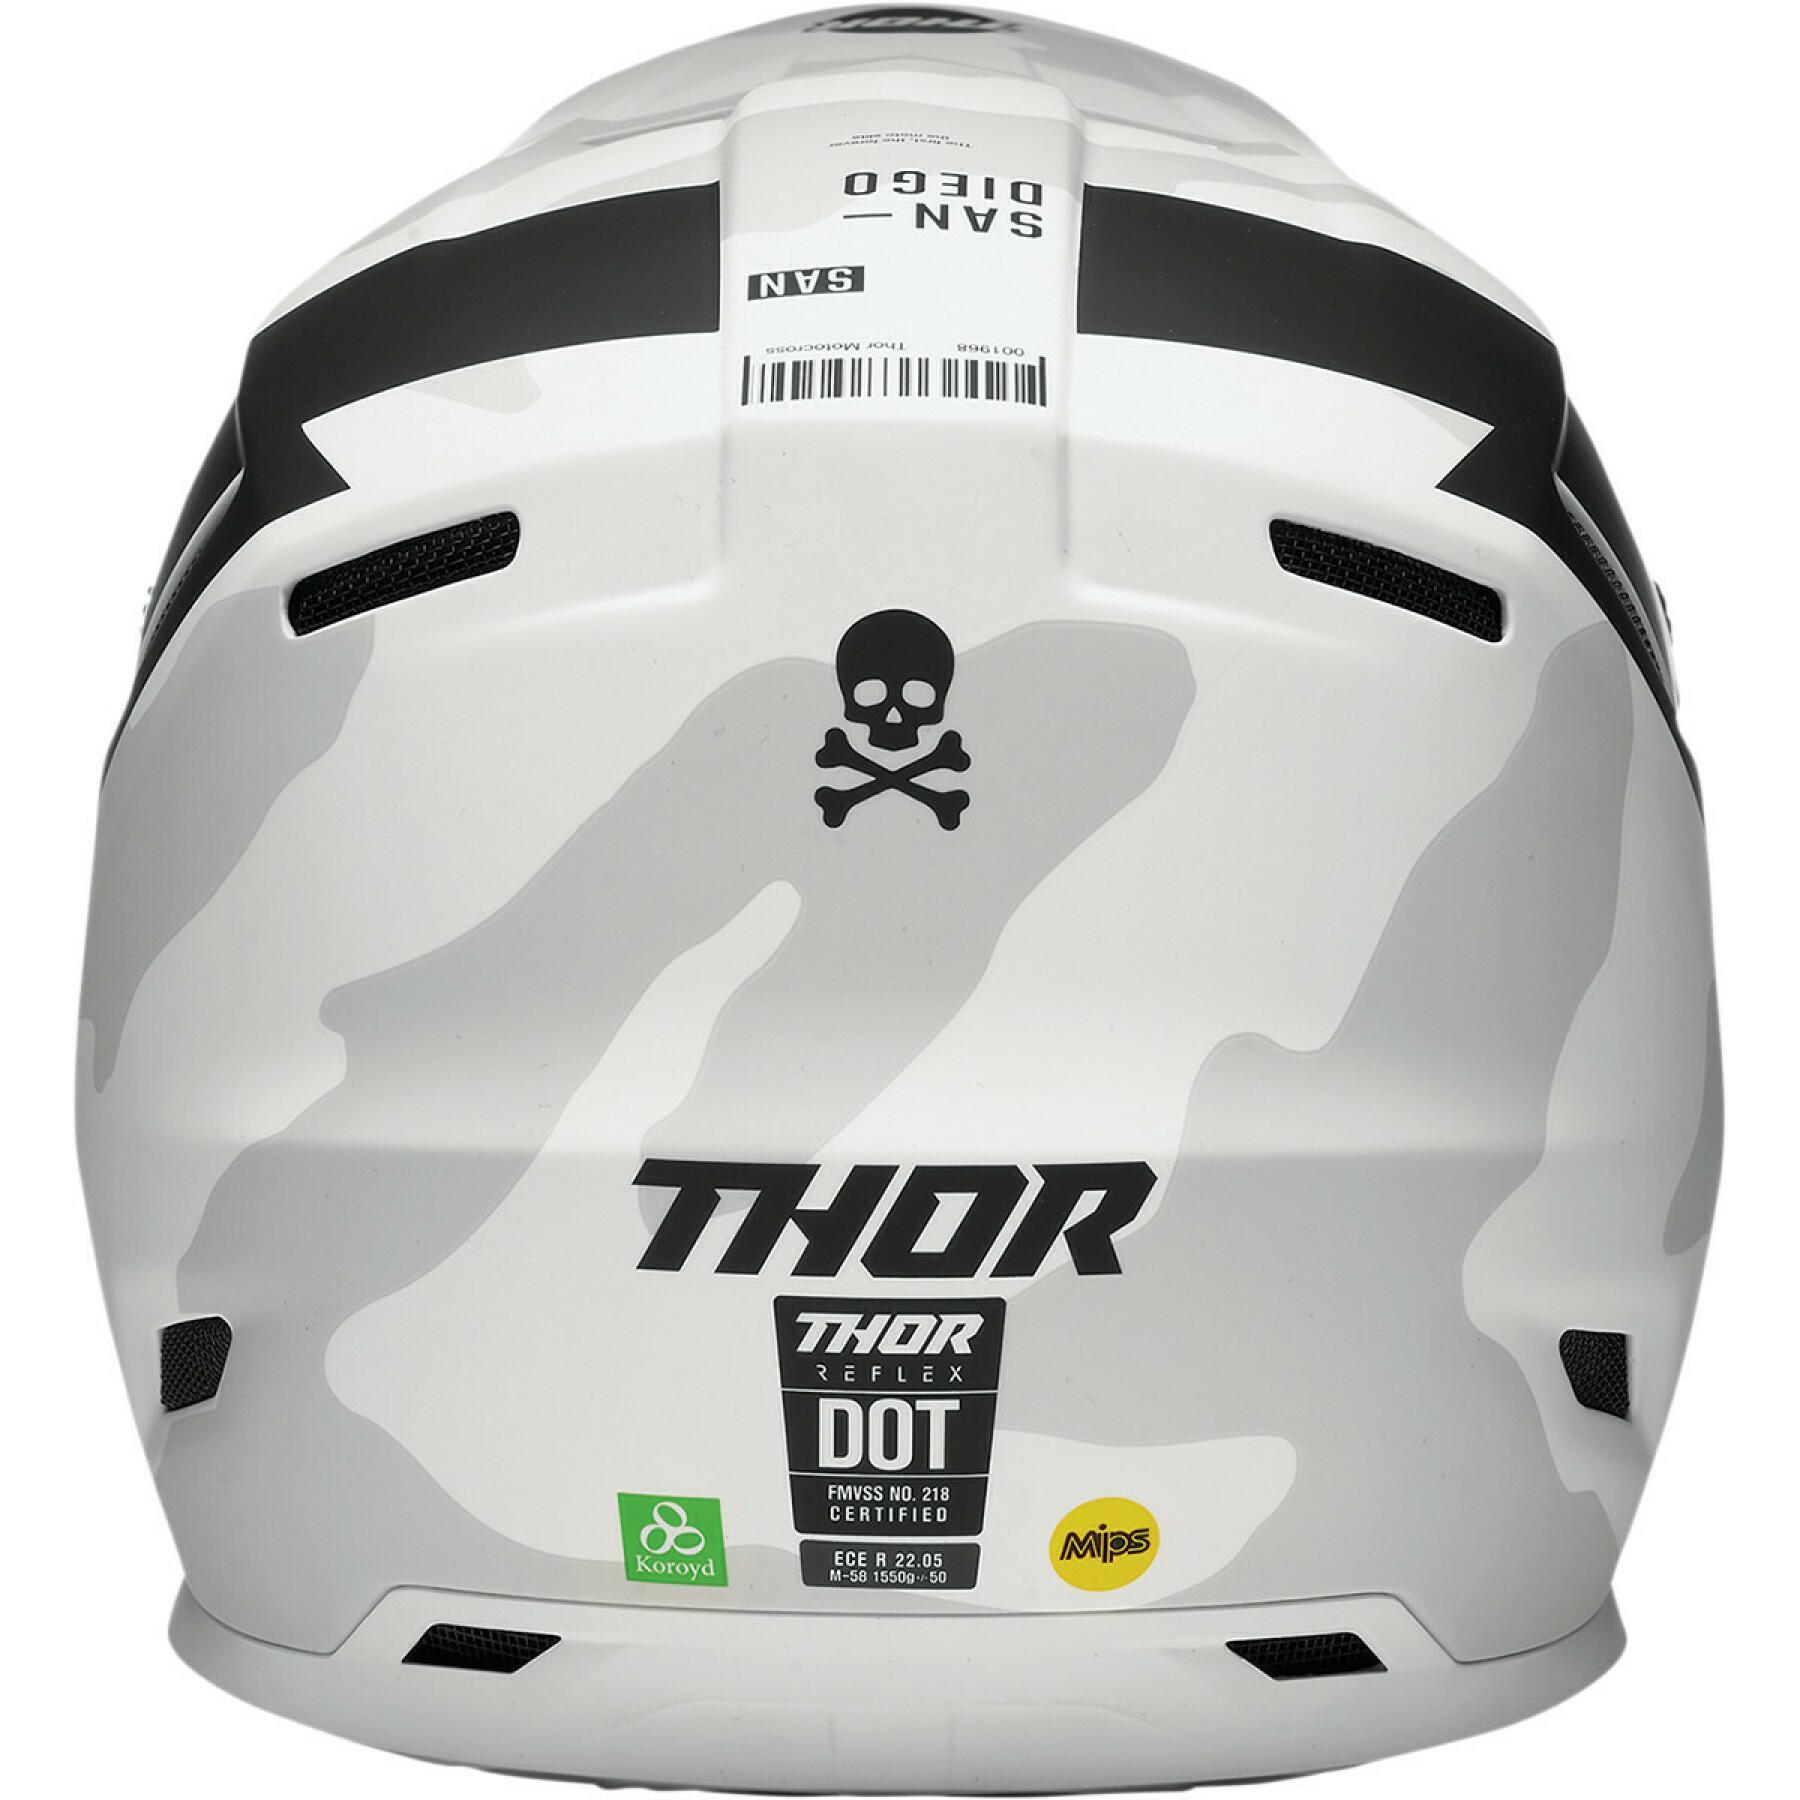 Motorrad-Cross-Helm Thor reflex ece cast